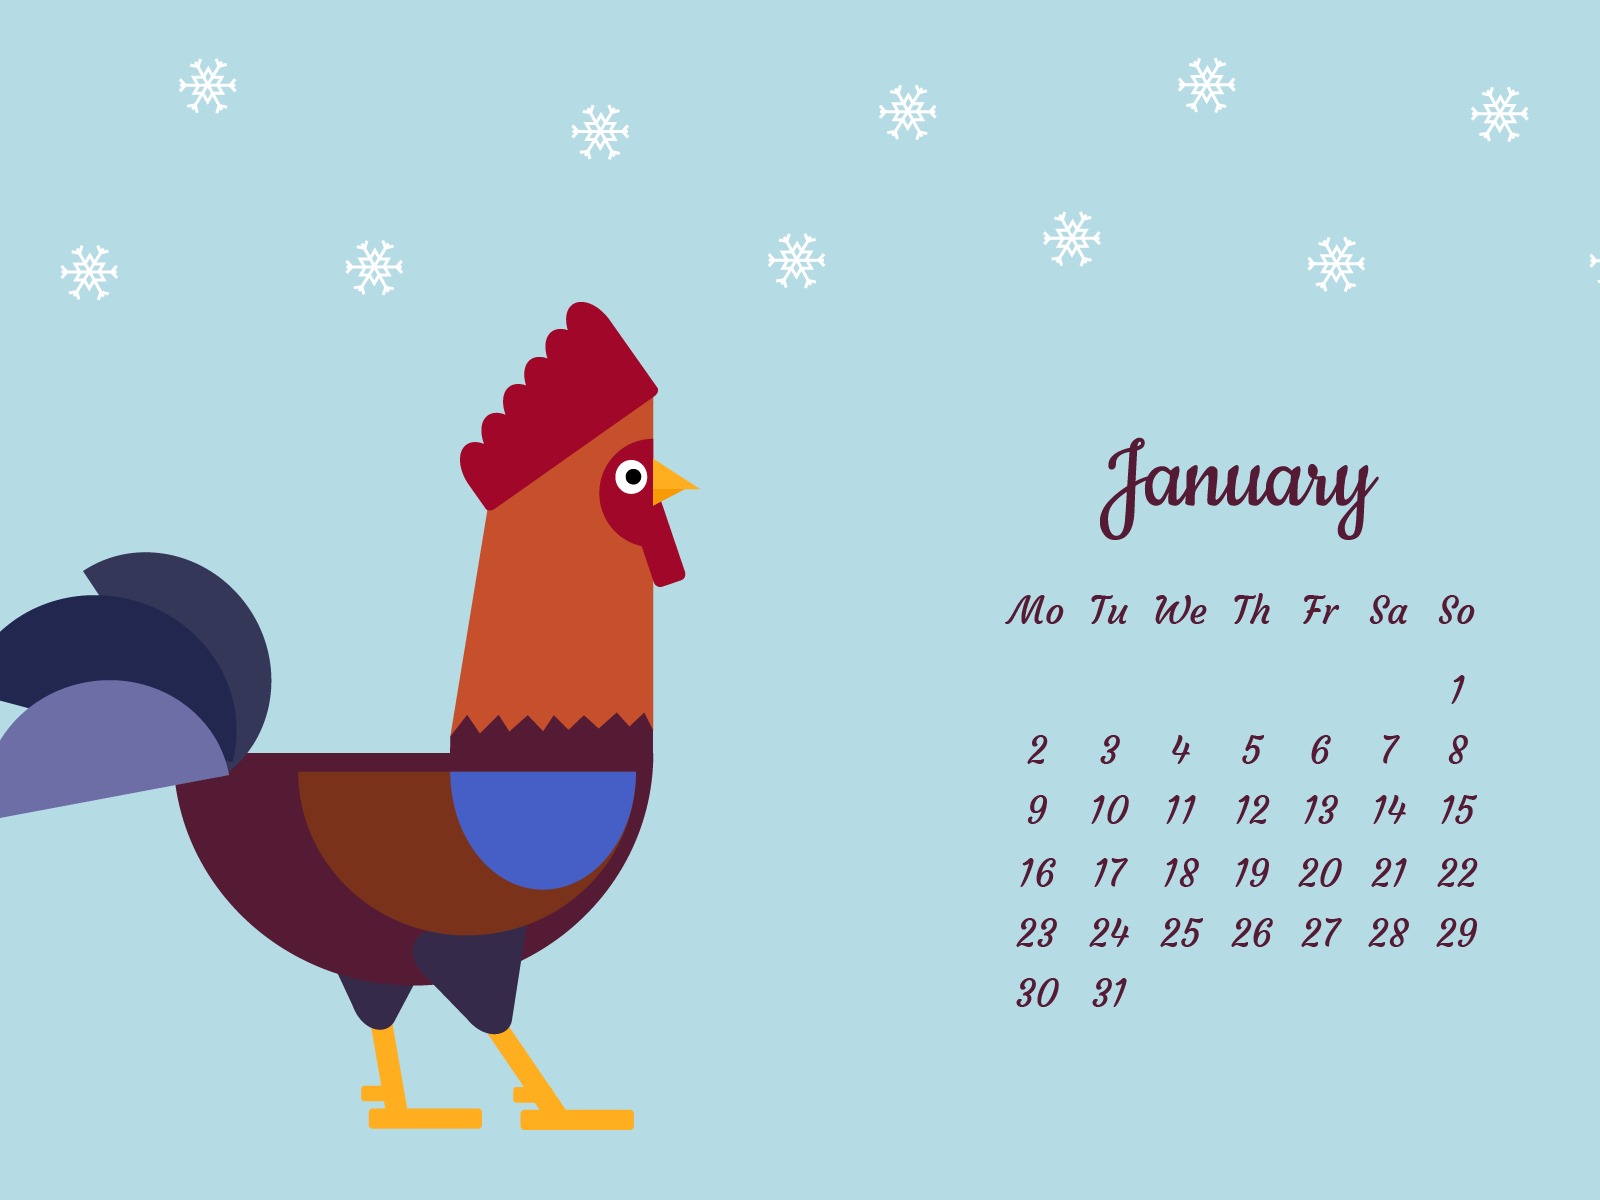 Fondos de calendario de enero de 2017 (2) #15 - 1600x1200